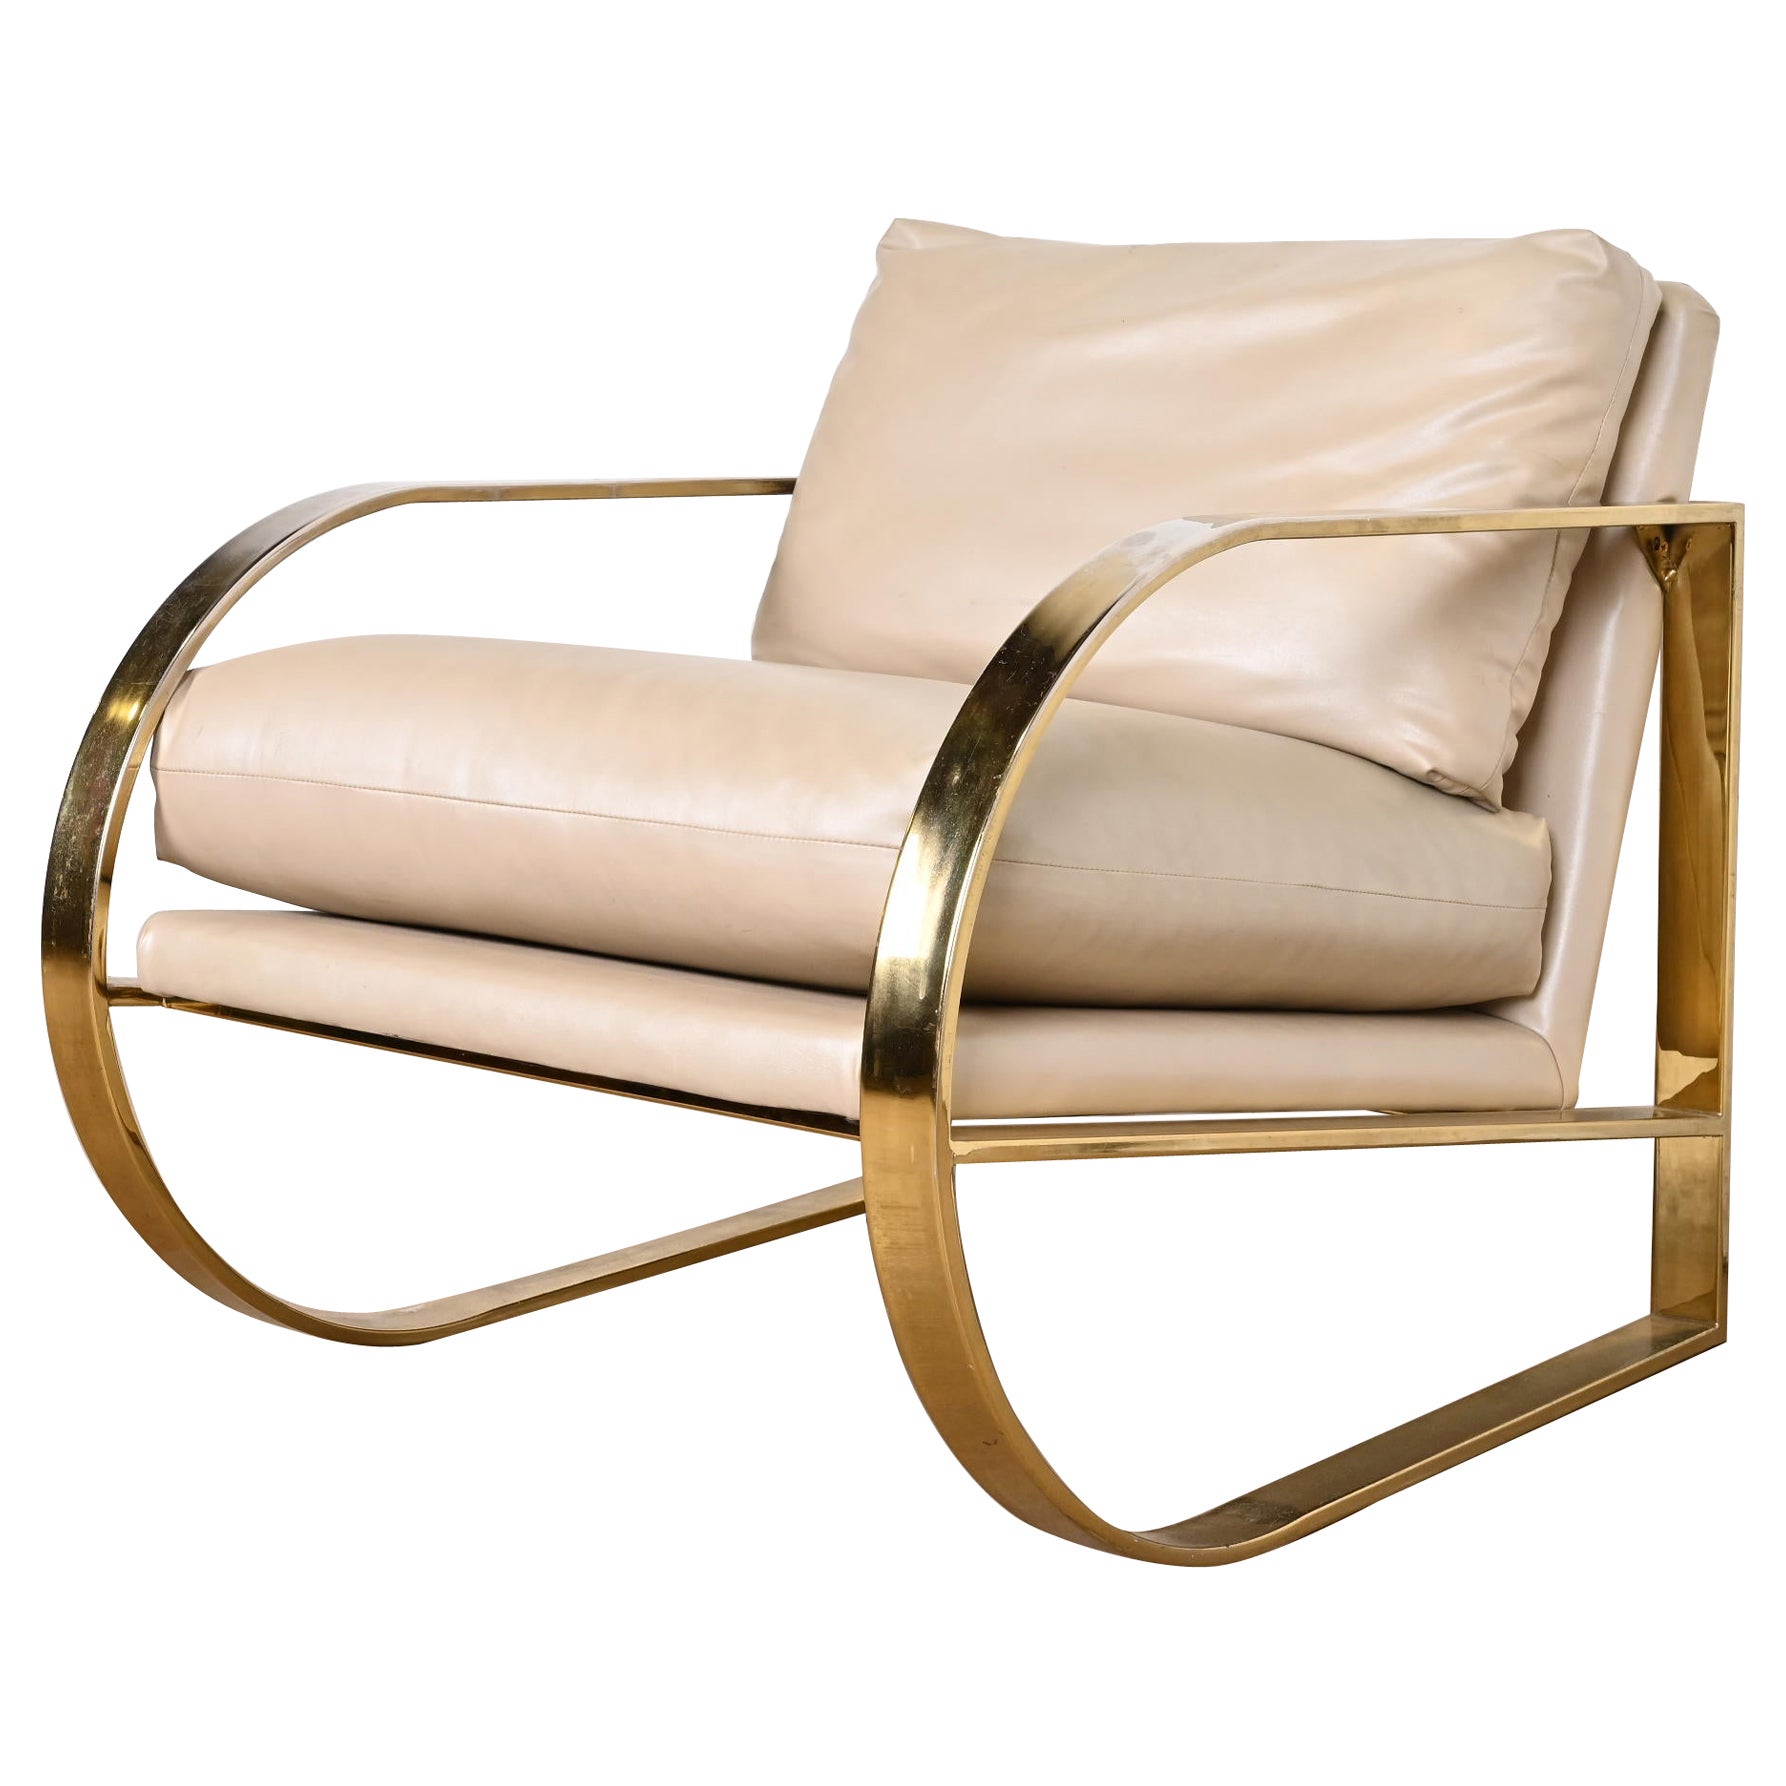 John Mascheroni for Swaim Originals Brass and Leather Lounge Chair